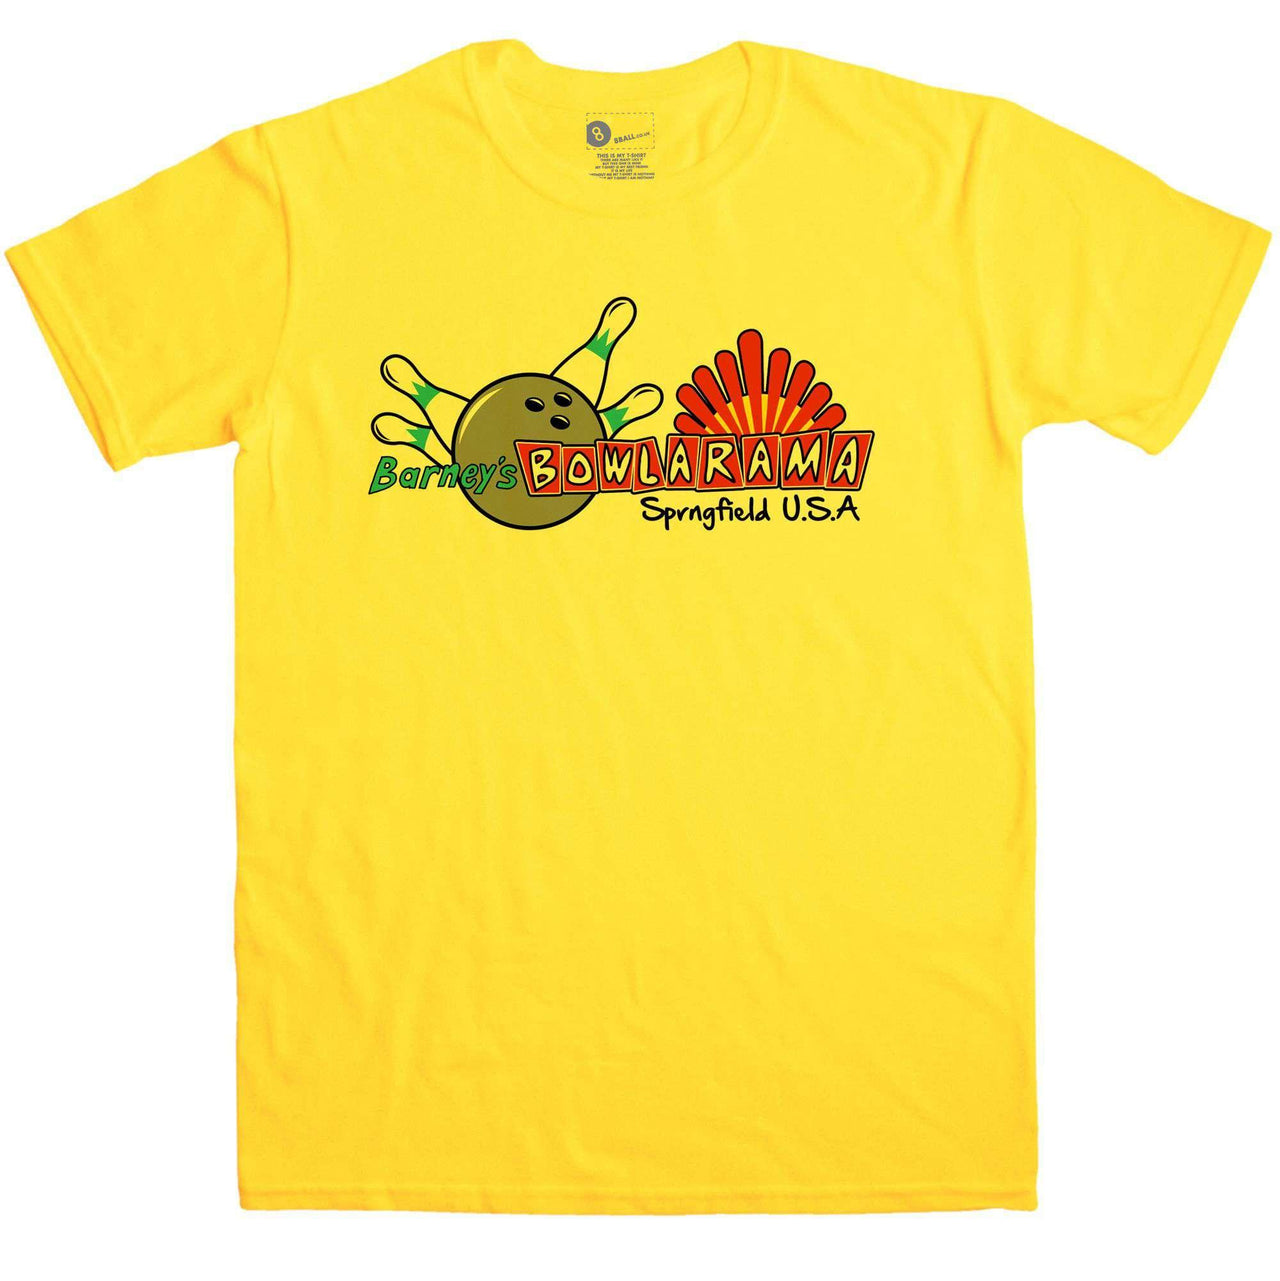 Barneys Bowlarama T-Shirt - 8Ball T-Shirt